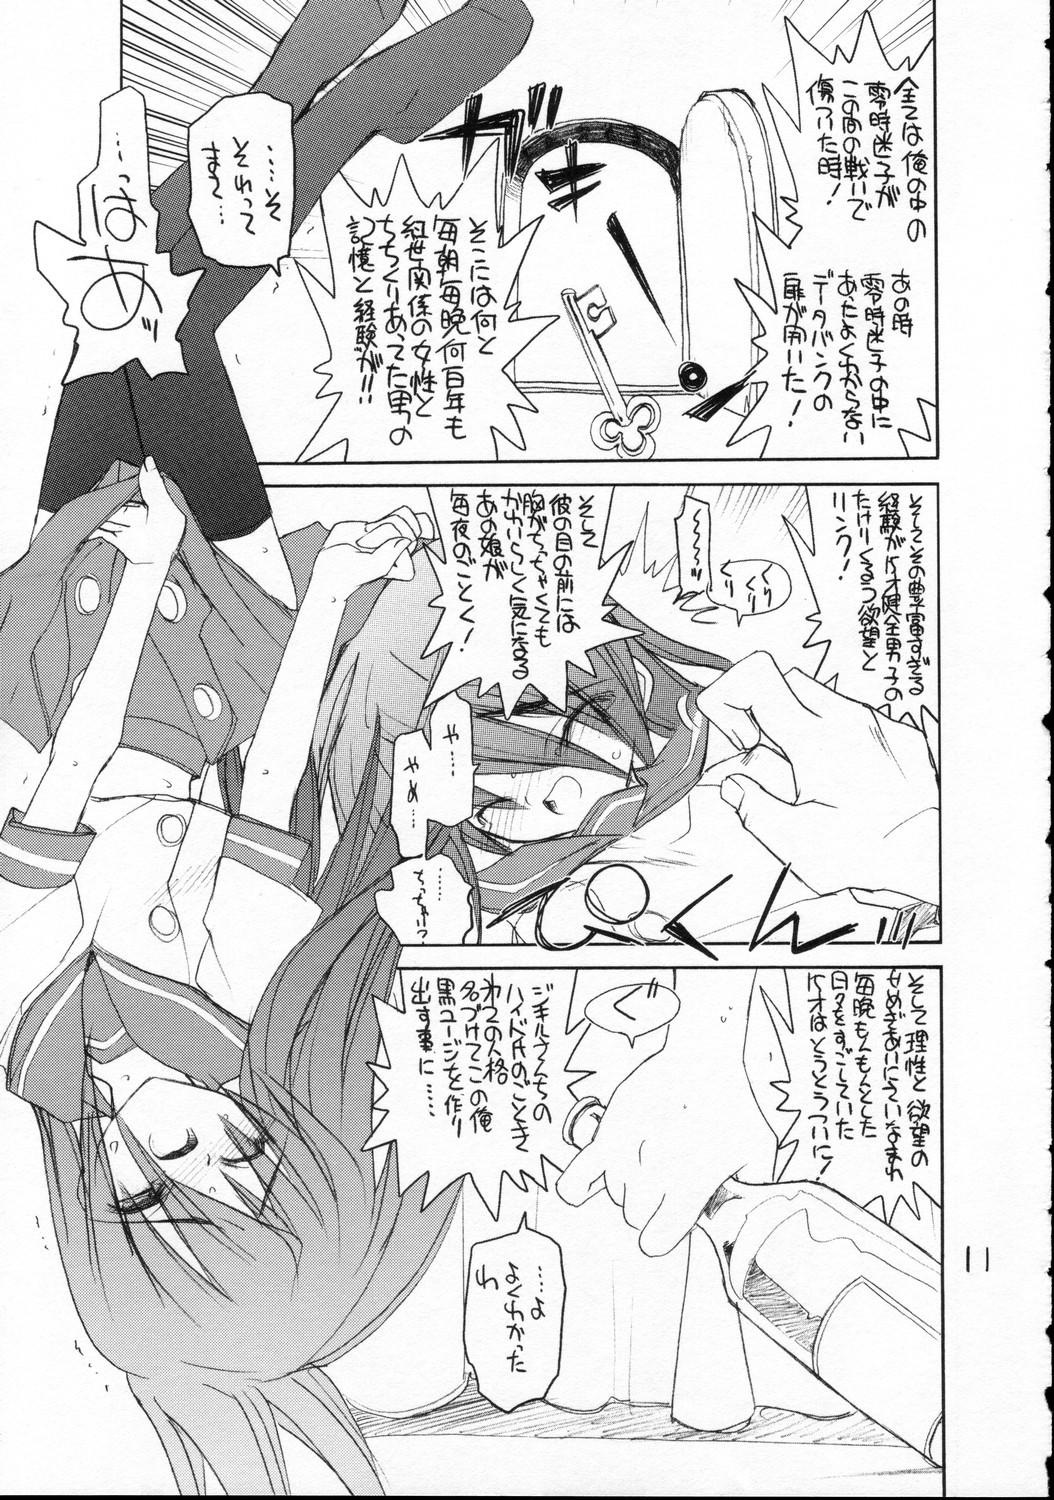 Bubblebutt Urusai - annoying annoying annoying - Shakugan no shana Athletic - Page 10